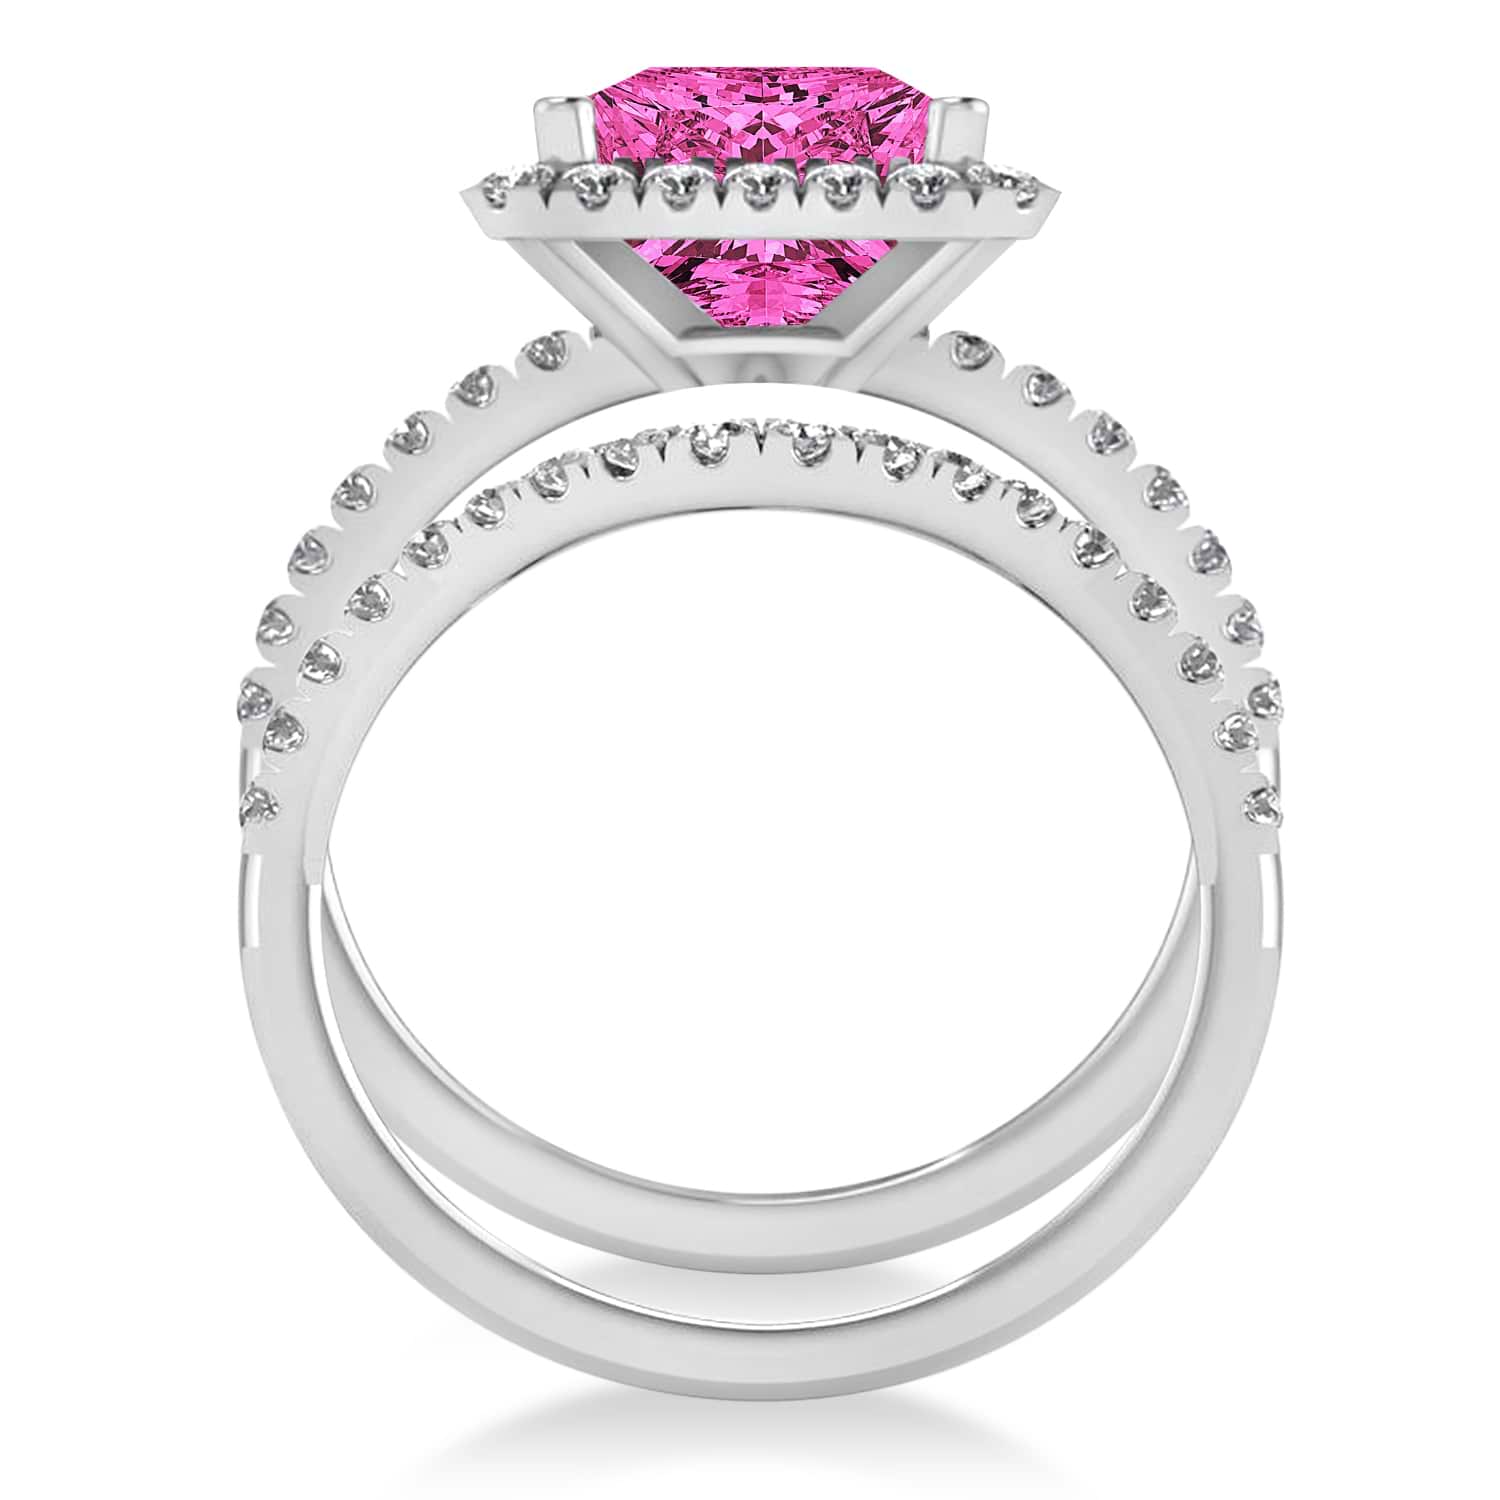 Pink Tourmaline & Diamonds Princess-Cut Halo Bridal Set 14K White Gold (3.74ct)